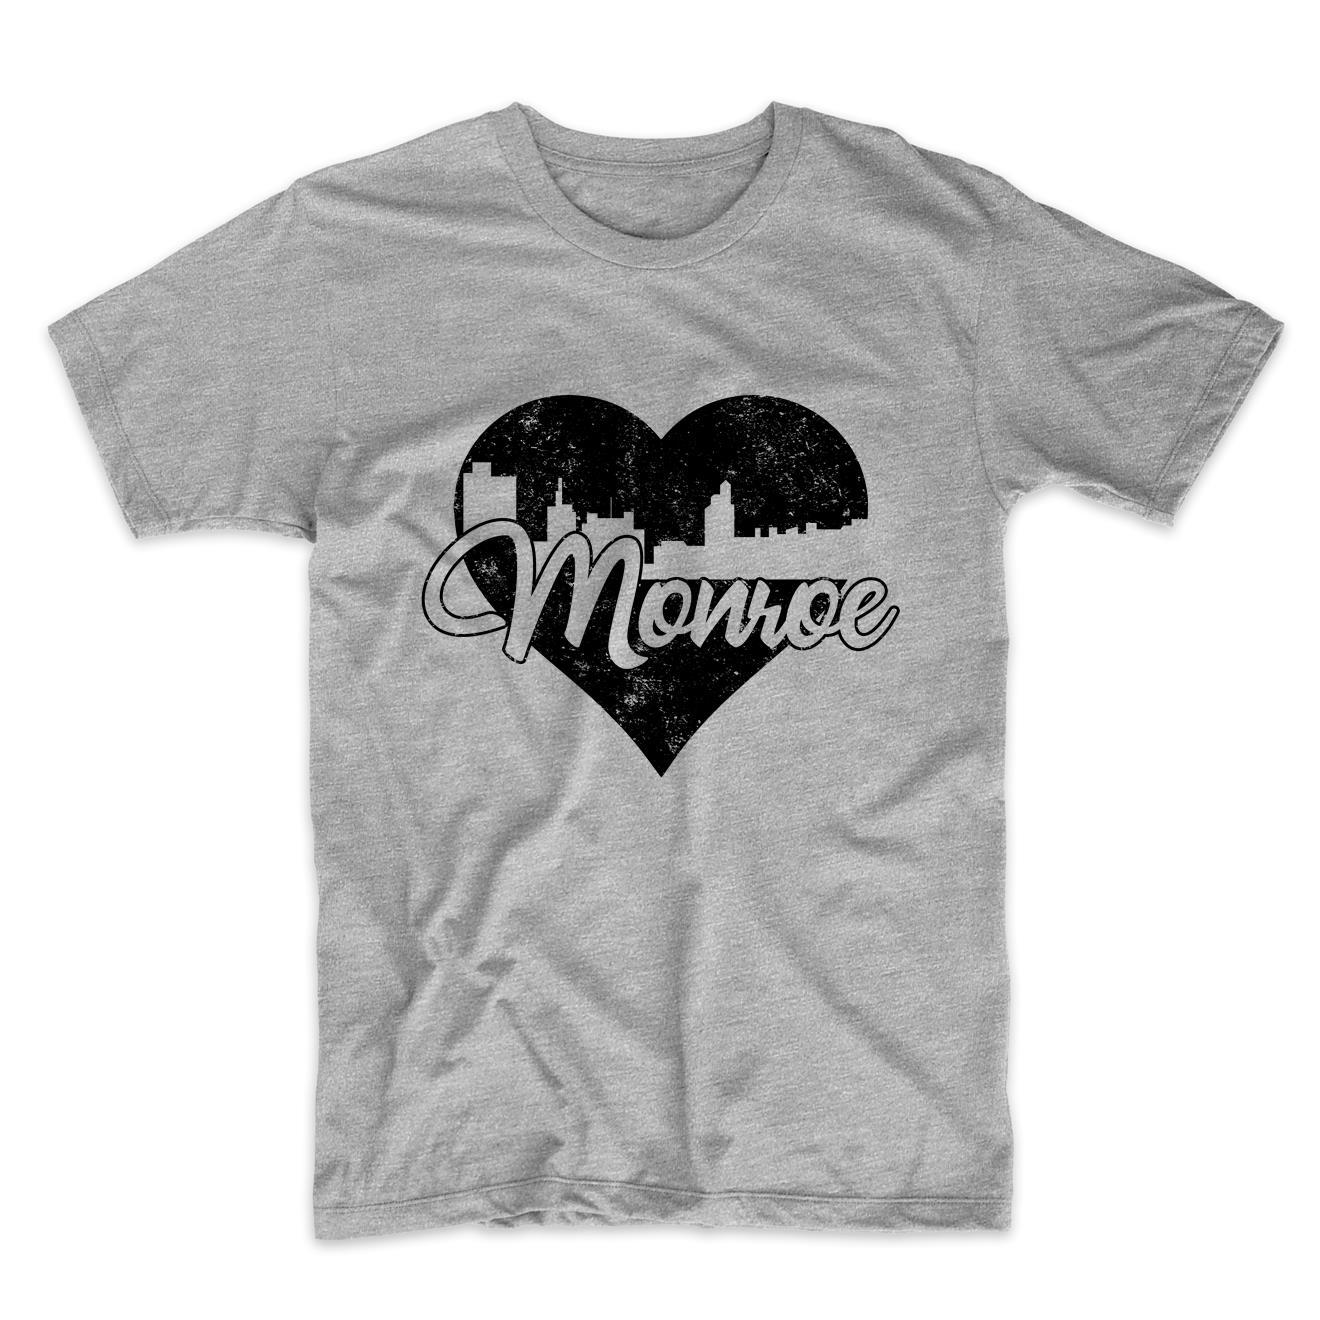 Retro Monroe Louisiana Skyline Heart Distressed T-Shirt